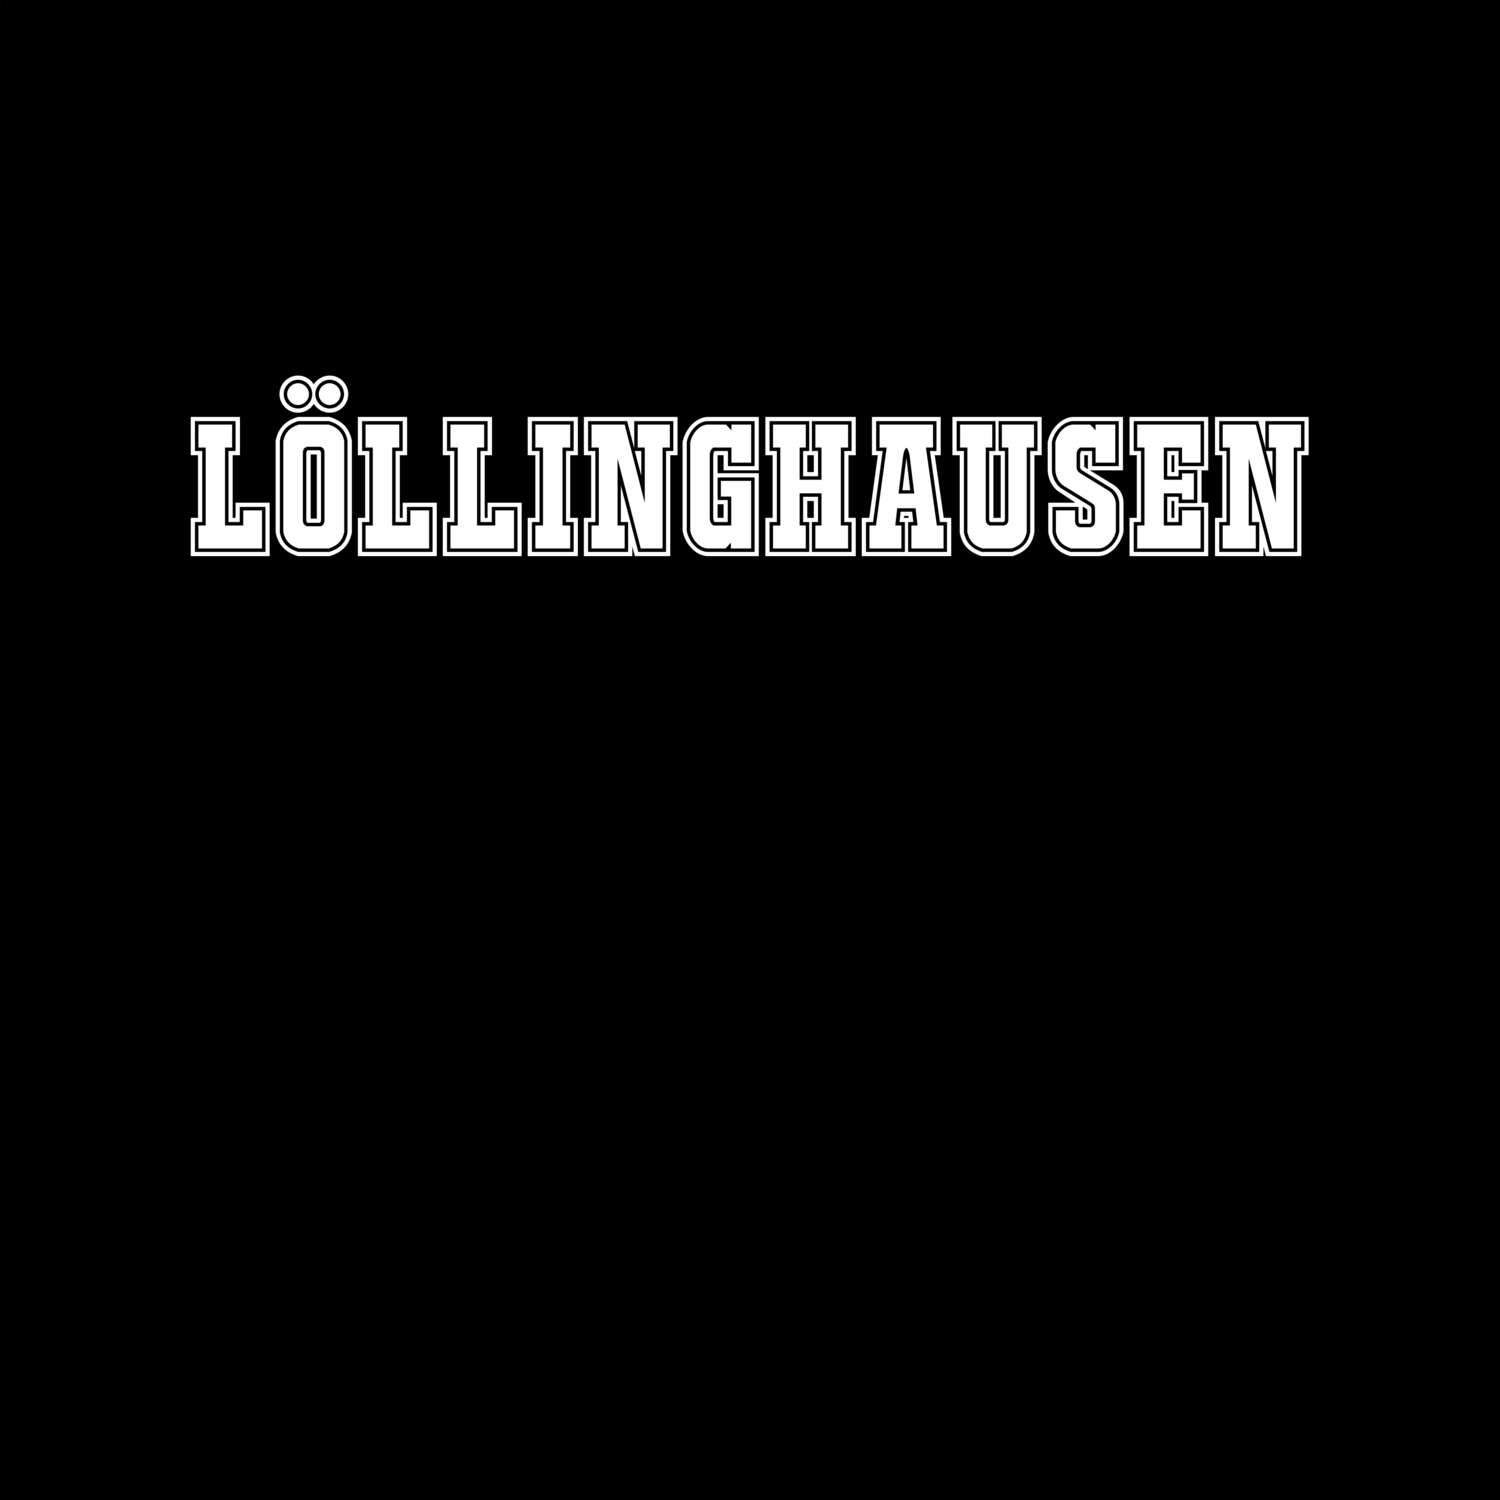 Löllinghausen T-Shirt »Classic«